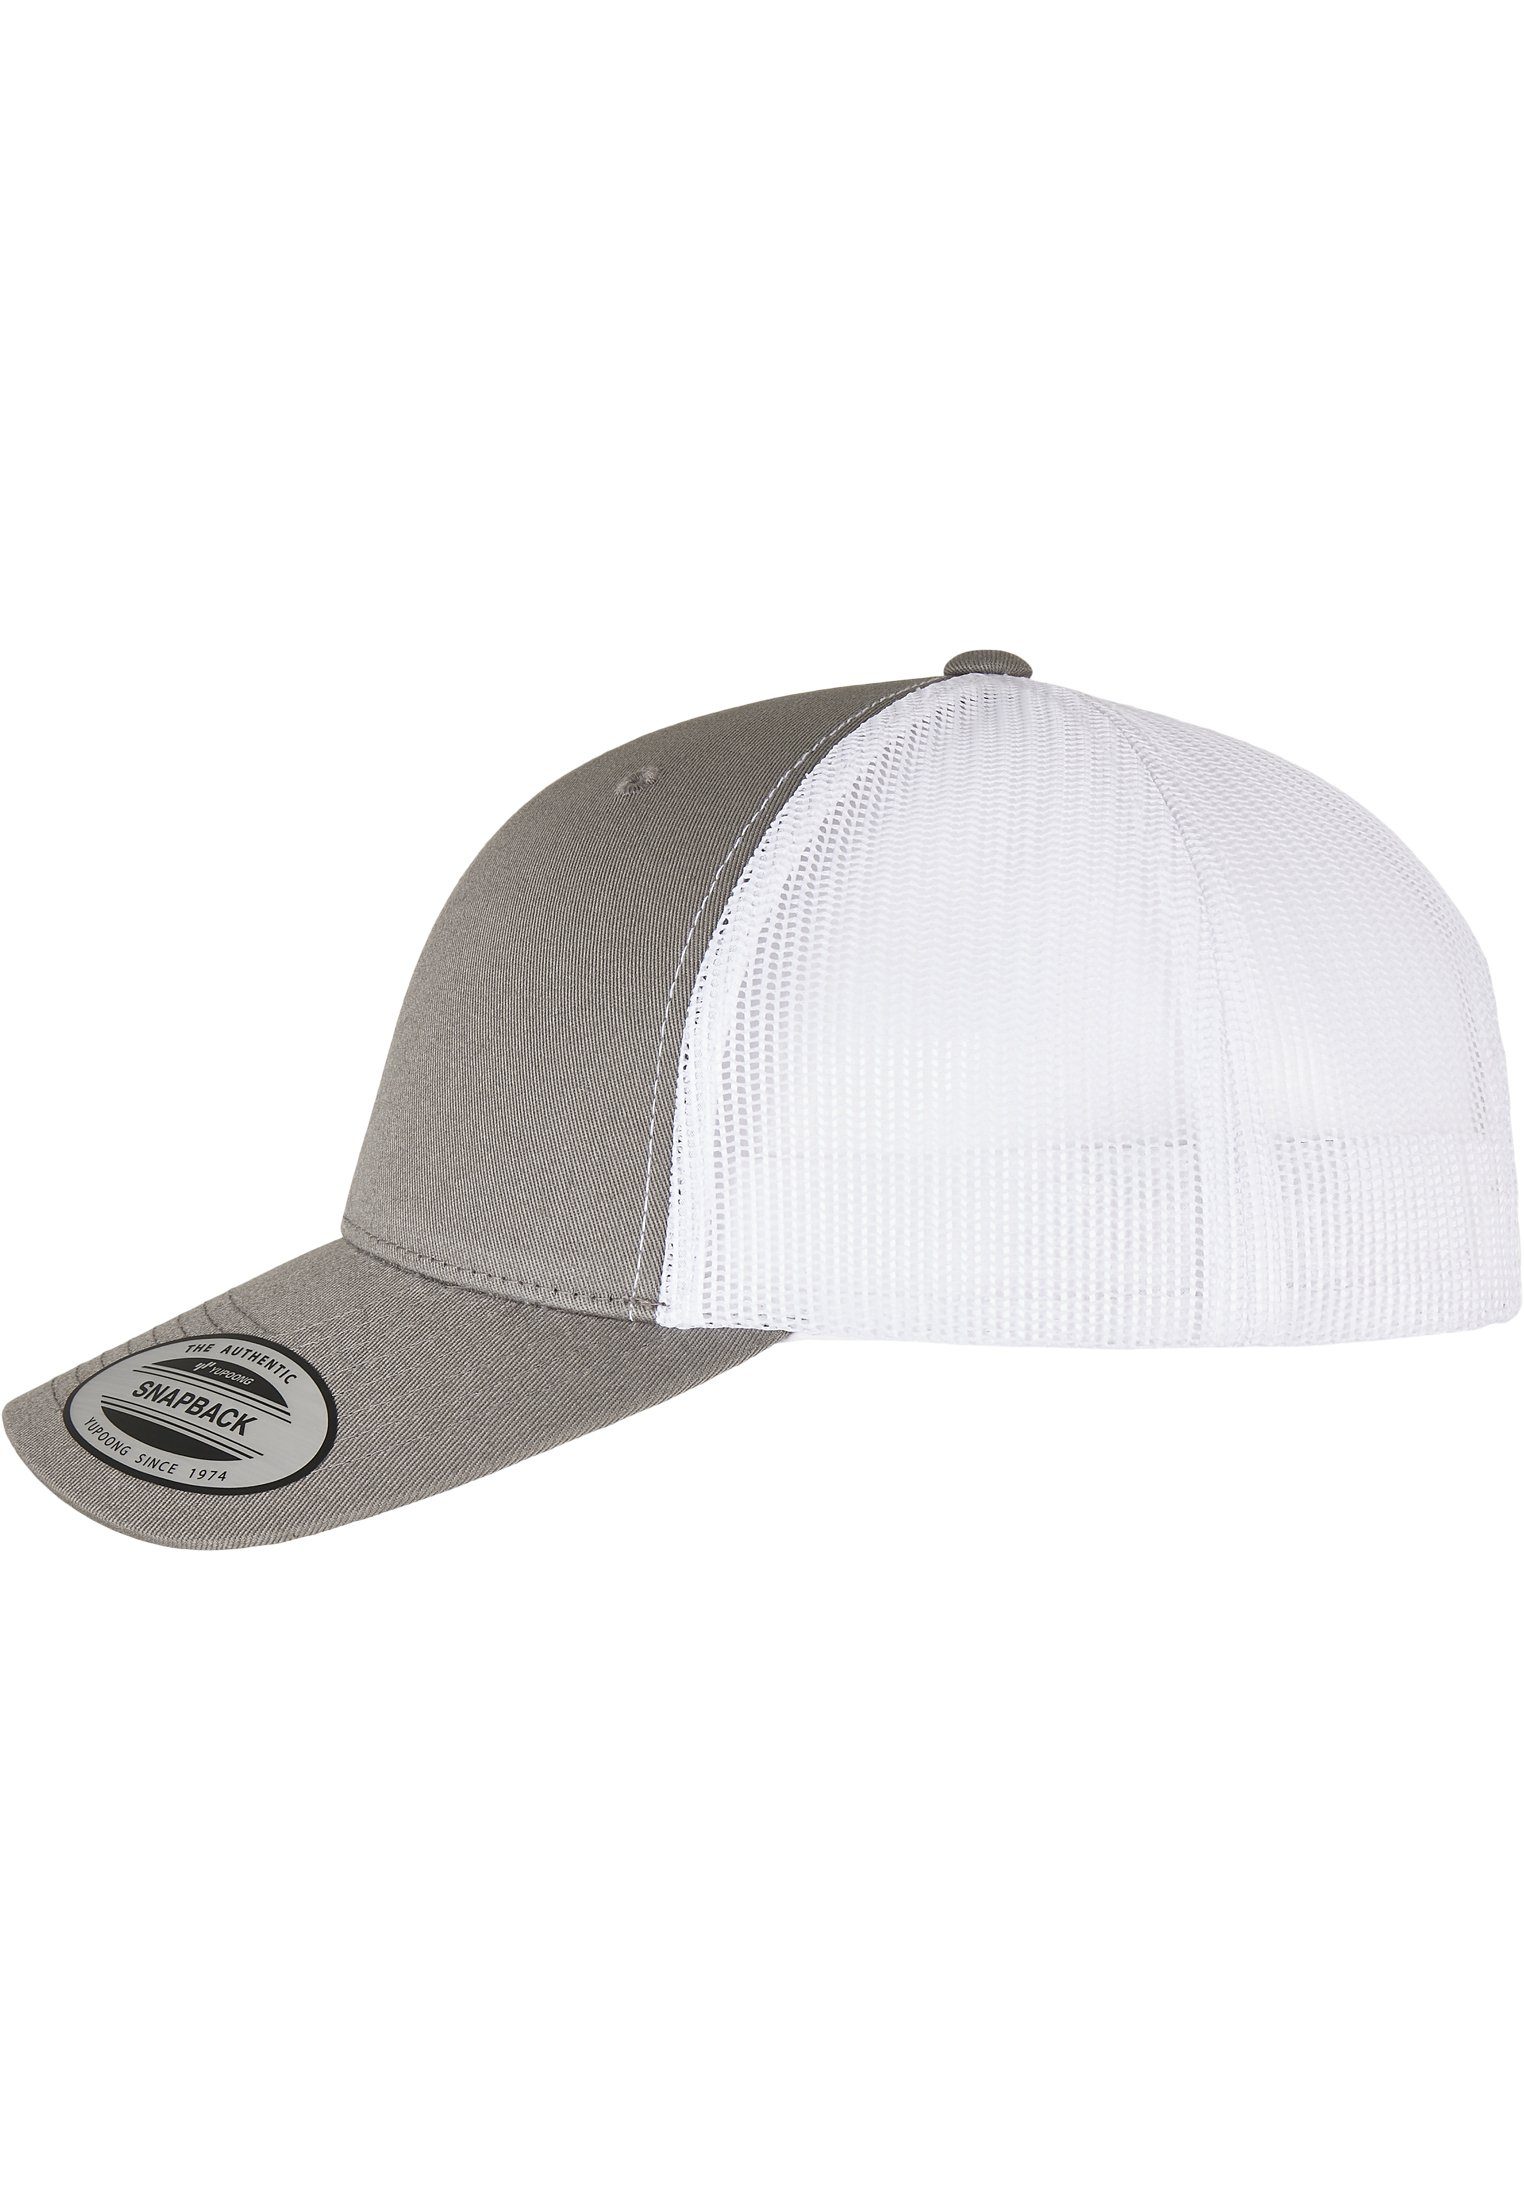 Flex CAP Cap Flexfit RECYCLED YP RETRO Caps 2-TONE CLASSICS grey/white TRUCKER